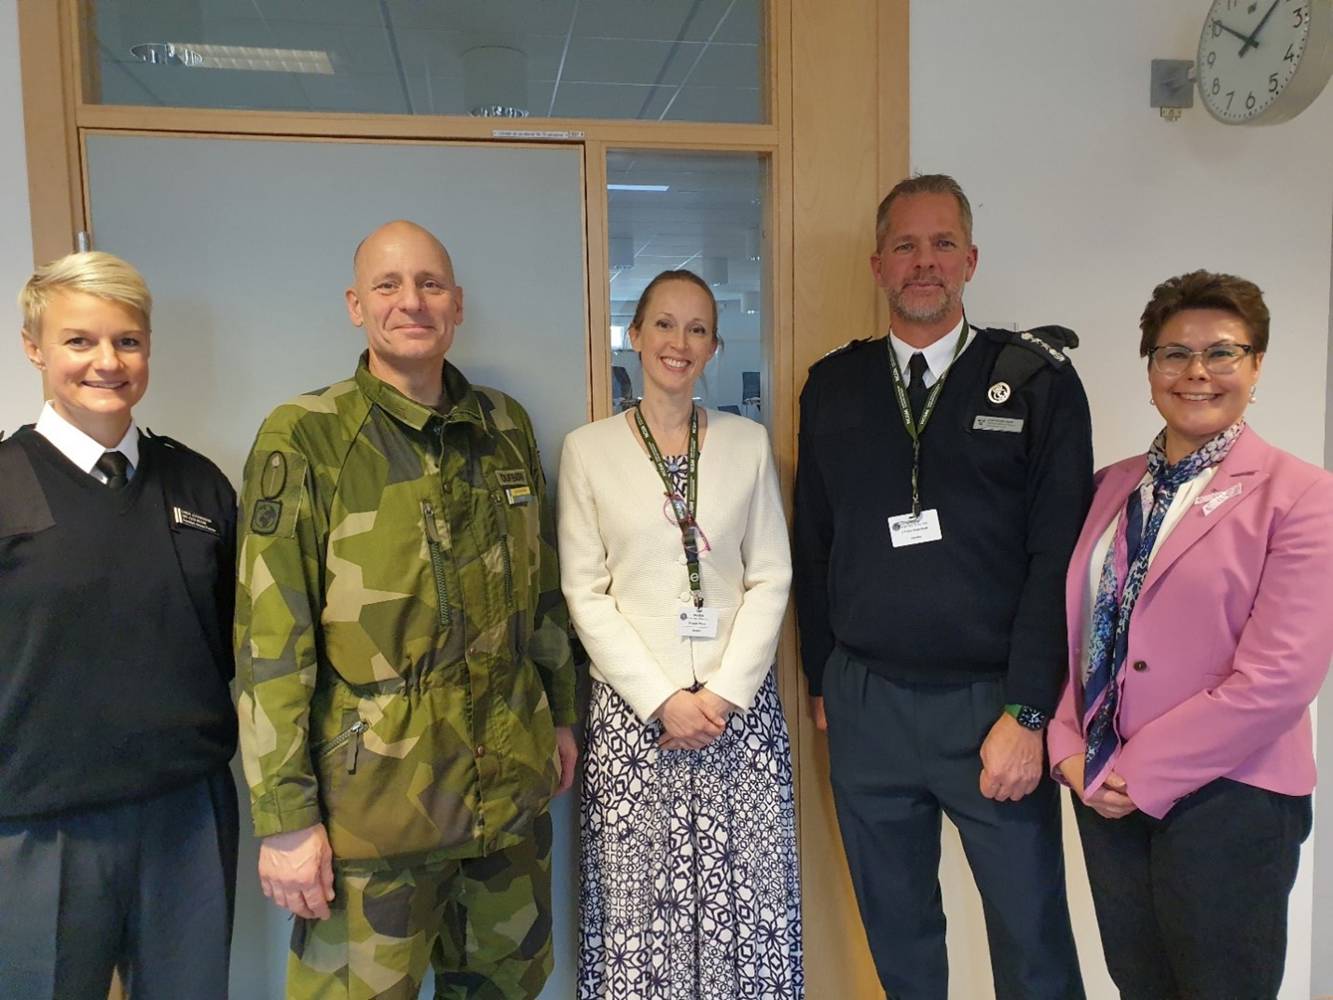 From the right, Linda Johansson, NCGM; Gustaf Dufberg, Commandant SWEDINT; Louise Olsson, PRIO; Olov Kesselmark, Commandant NCGM; Elena Ojala, NCGM and Fincent.